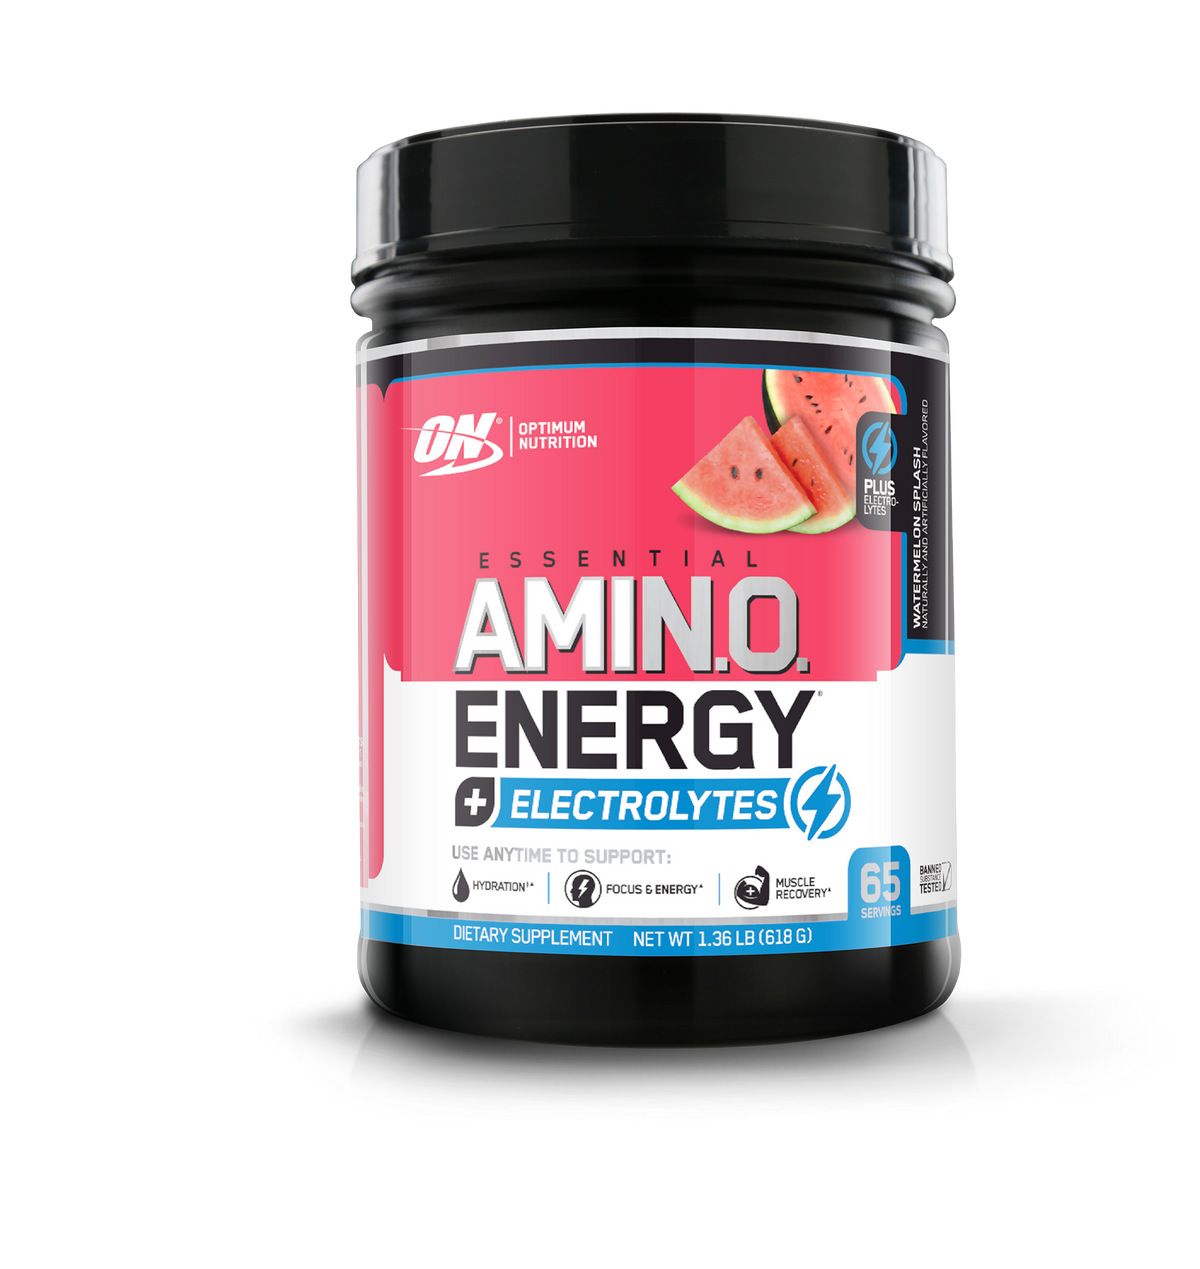 Аминокислоты nutrition. Amino Energy 65. Аминокислоты Essential Amino Energy + Electrolytes. Optimum Nutrition Amino Energy (270 г.) - зелёное яблоко. BCAA Amino Energy.